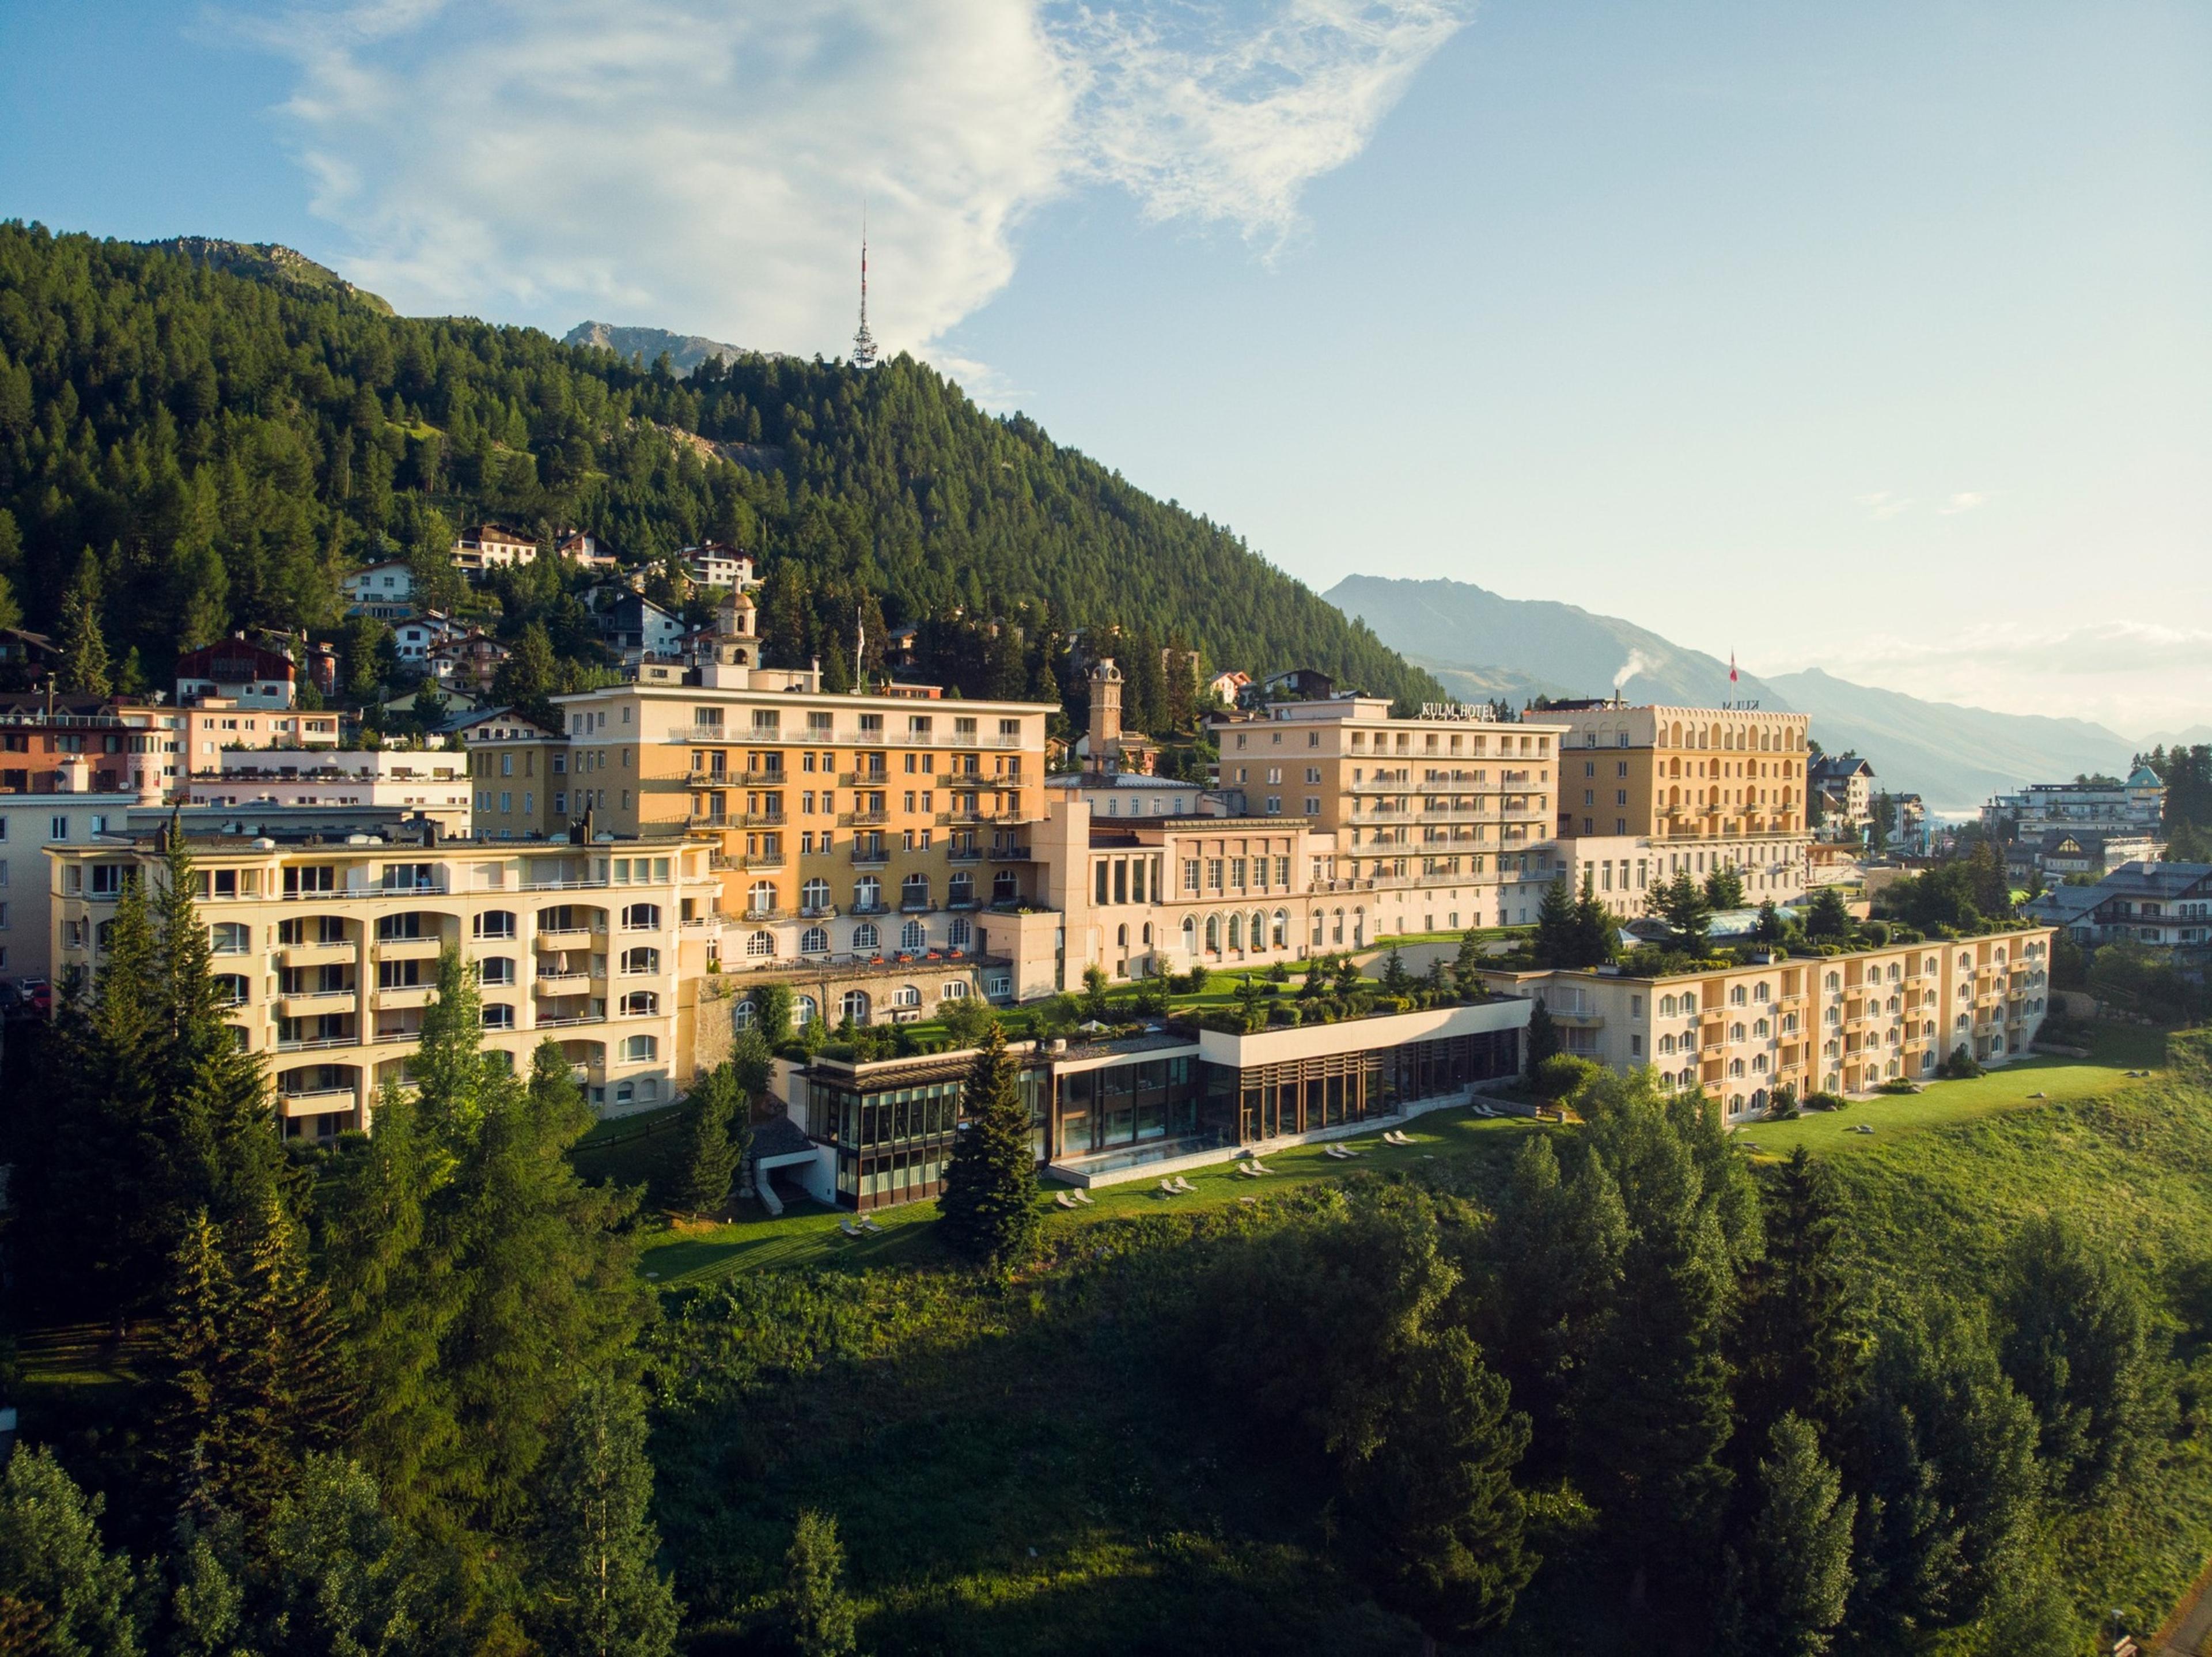 Kulm Hotel - St Moritz, Switzerland